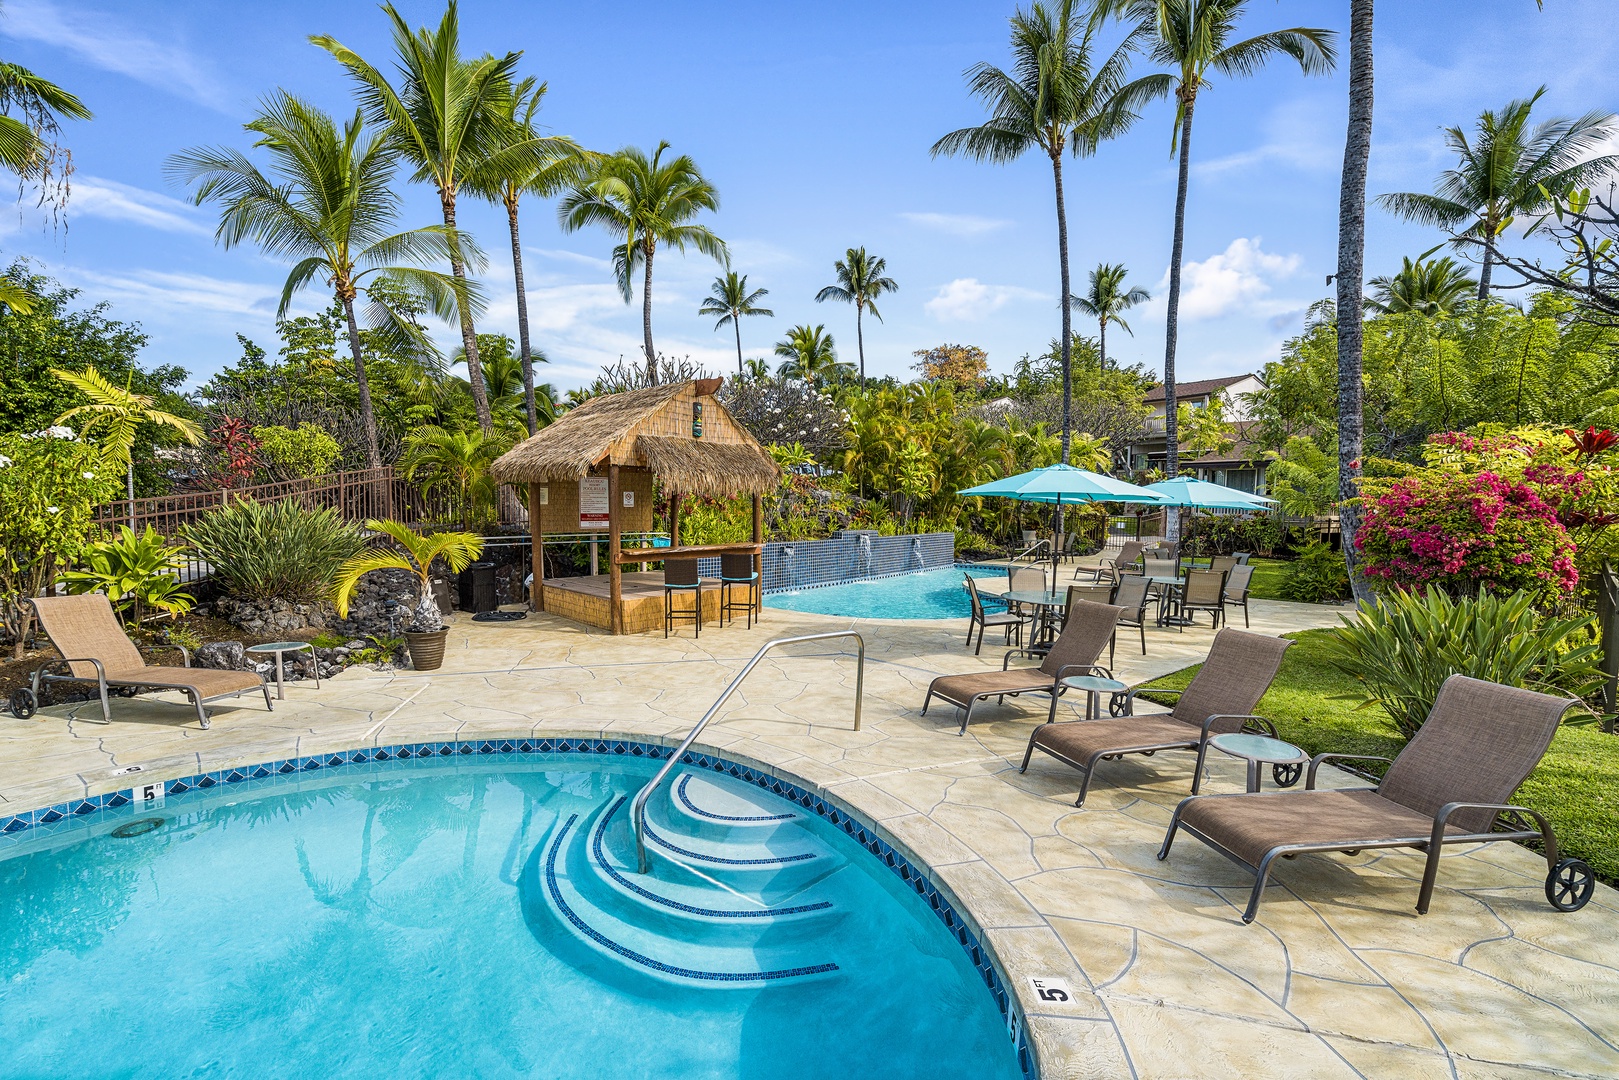 Kailua Kona Vacation Rentals, Keauhou Resort 125 - Beautiful Keauhou Resort Pool